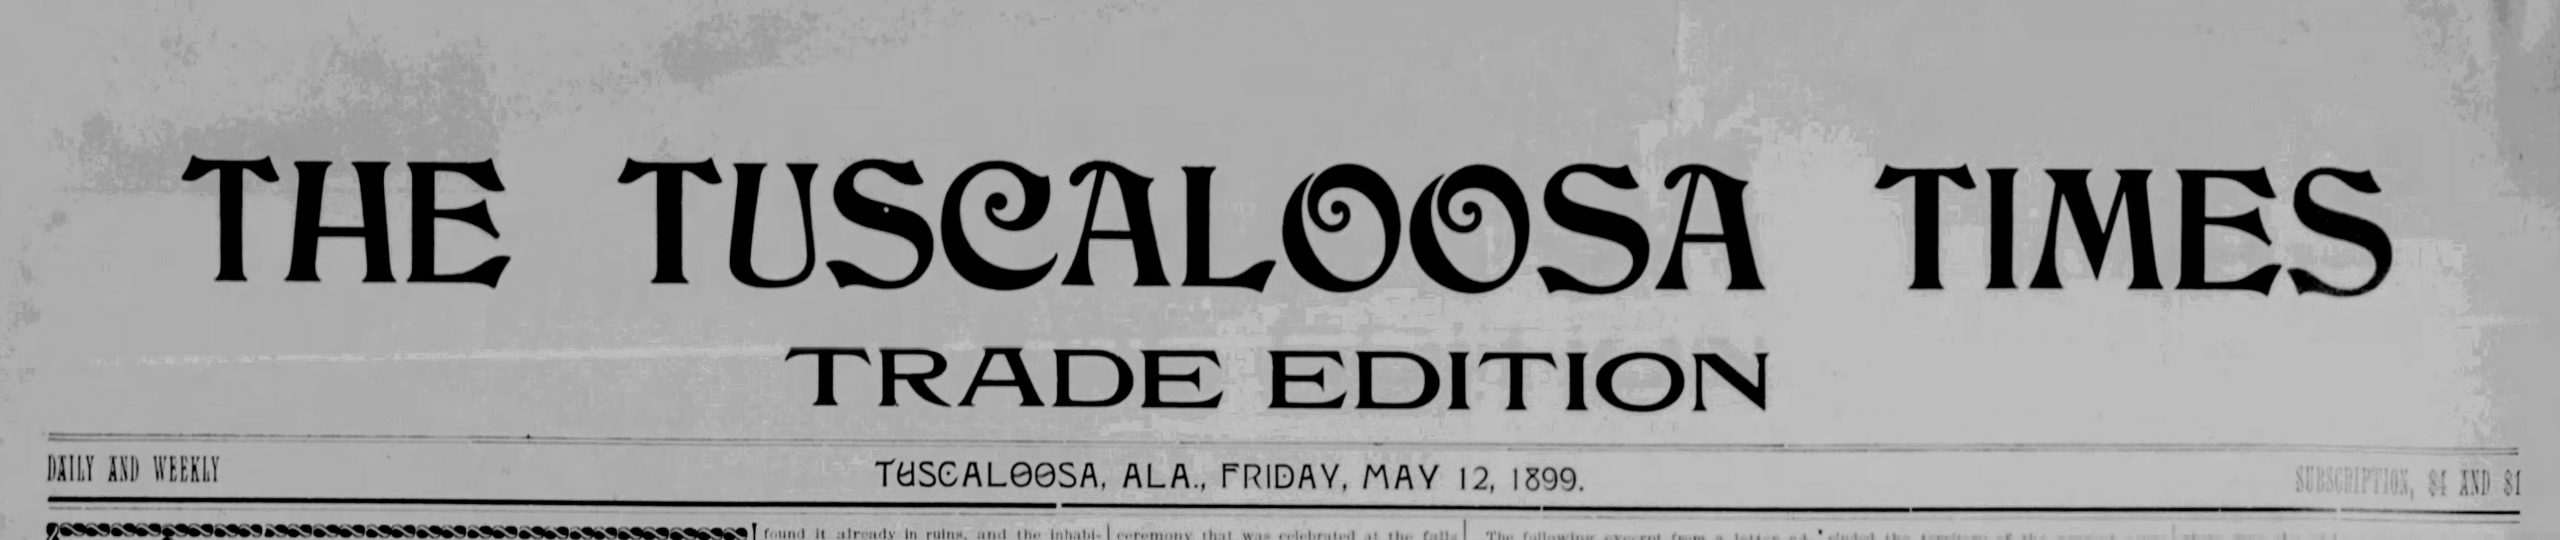 PATRON + 1899 News clipping about Tuscaloosa, Alabama citizen G. B. Wright